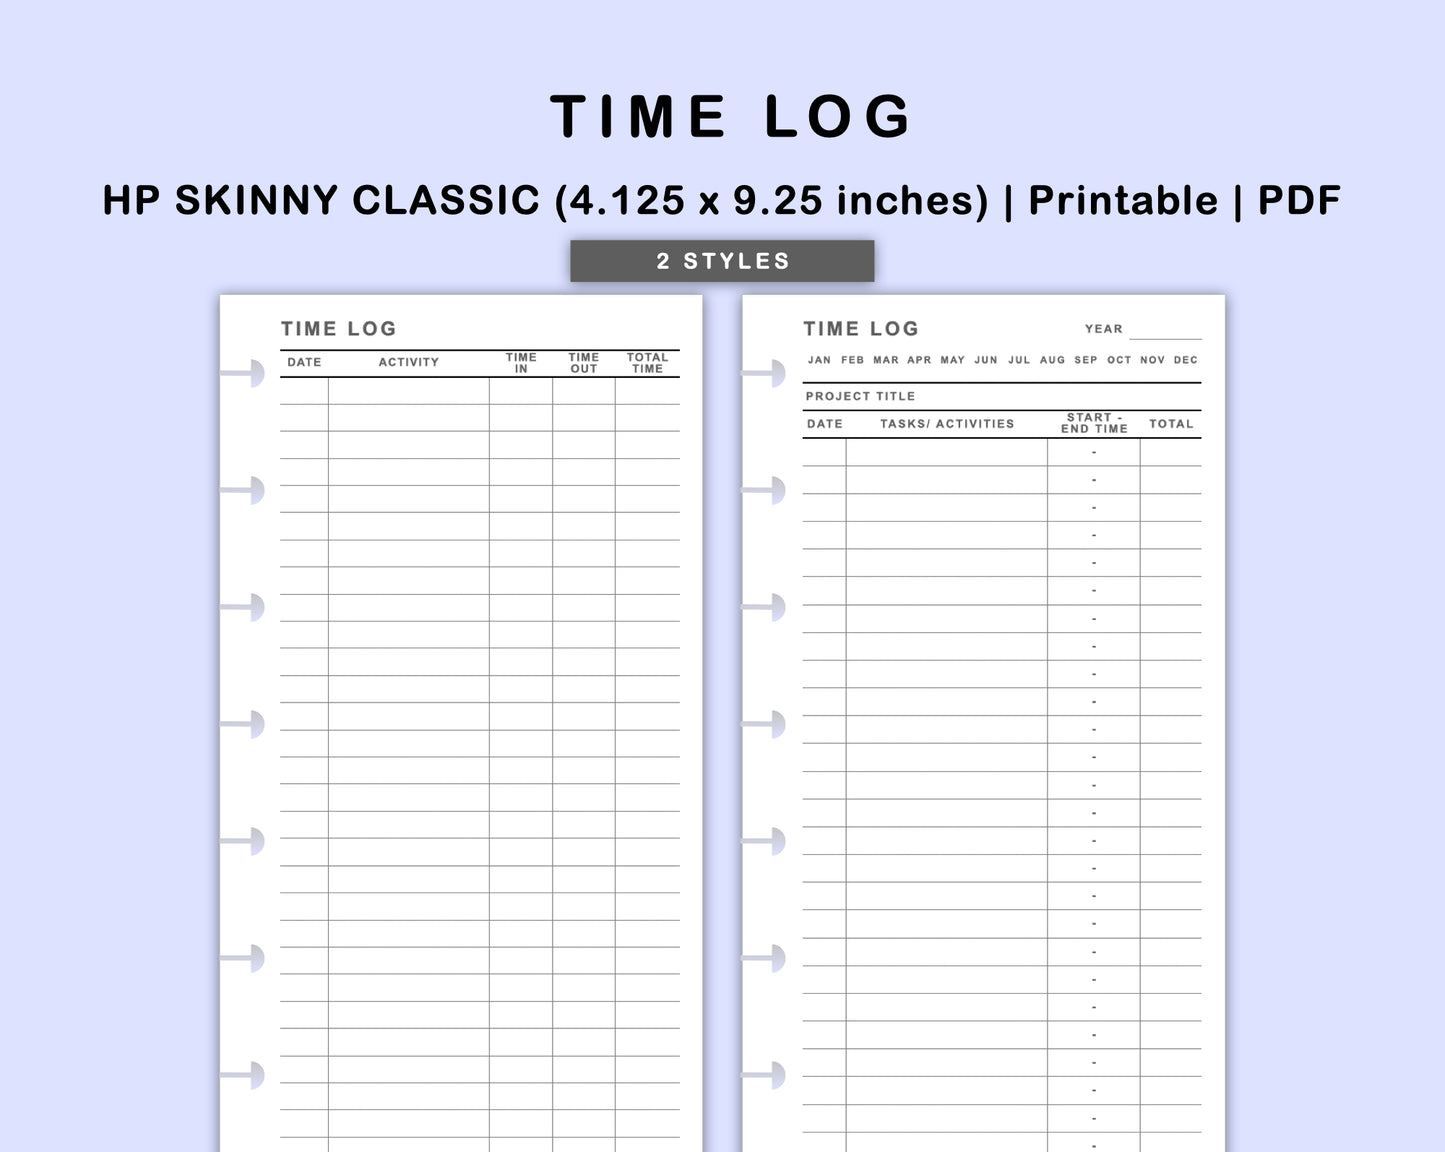 Skinny Classic HP Inserts - Time Log